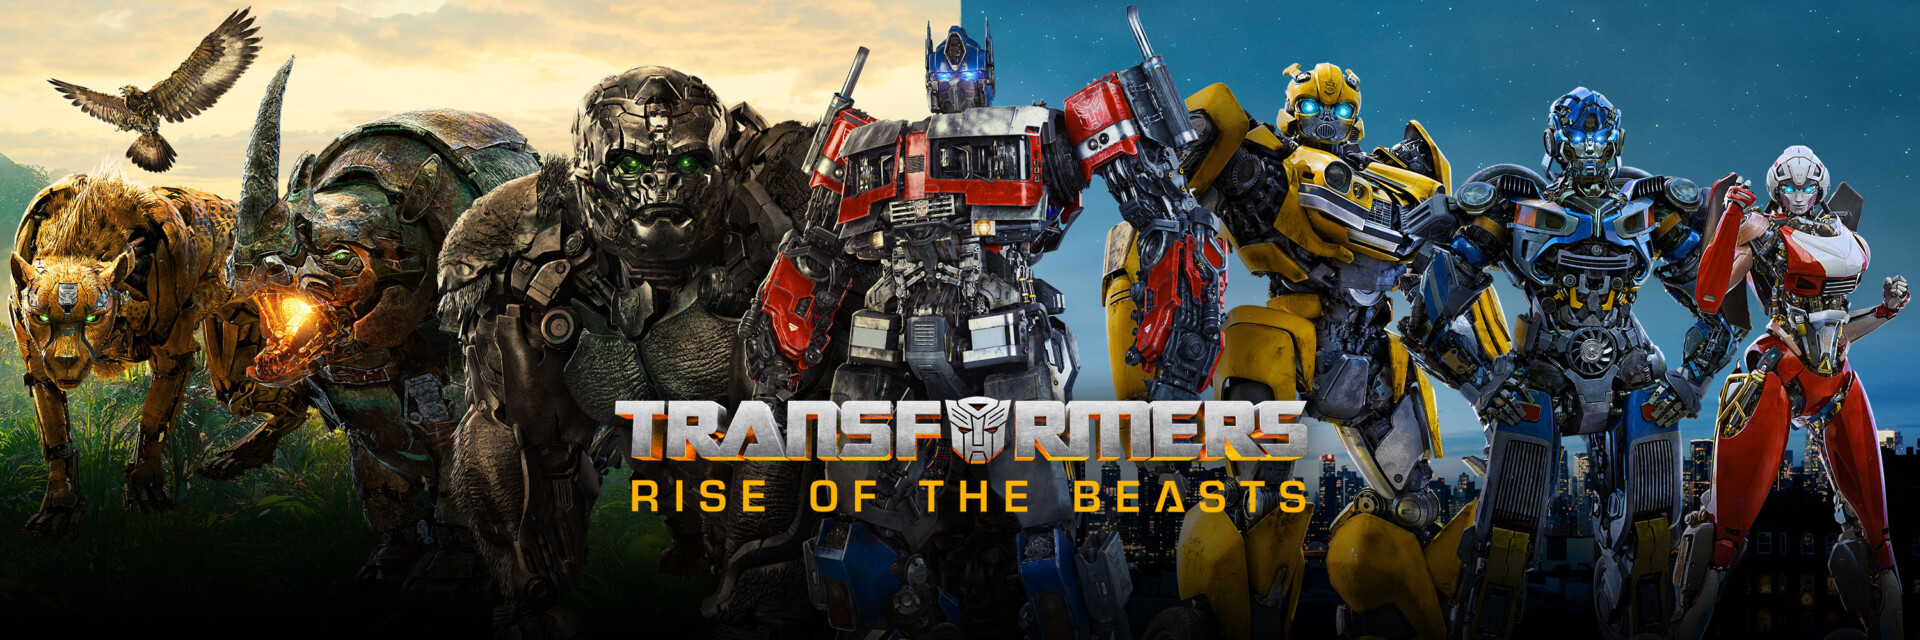 Трансформеры звероботы 1080. Трансформеры восхождение звероботов. Transformers восхождение звероботов. Трансформеры восхождение звероботов Постер. Transformers Rise of the Beasts.